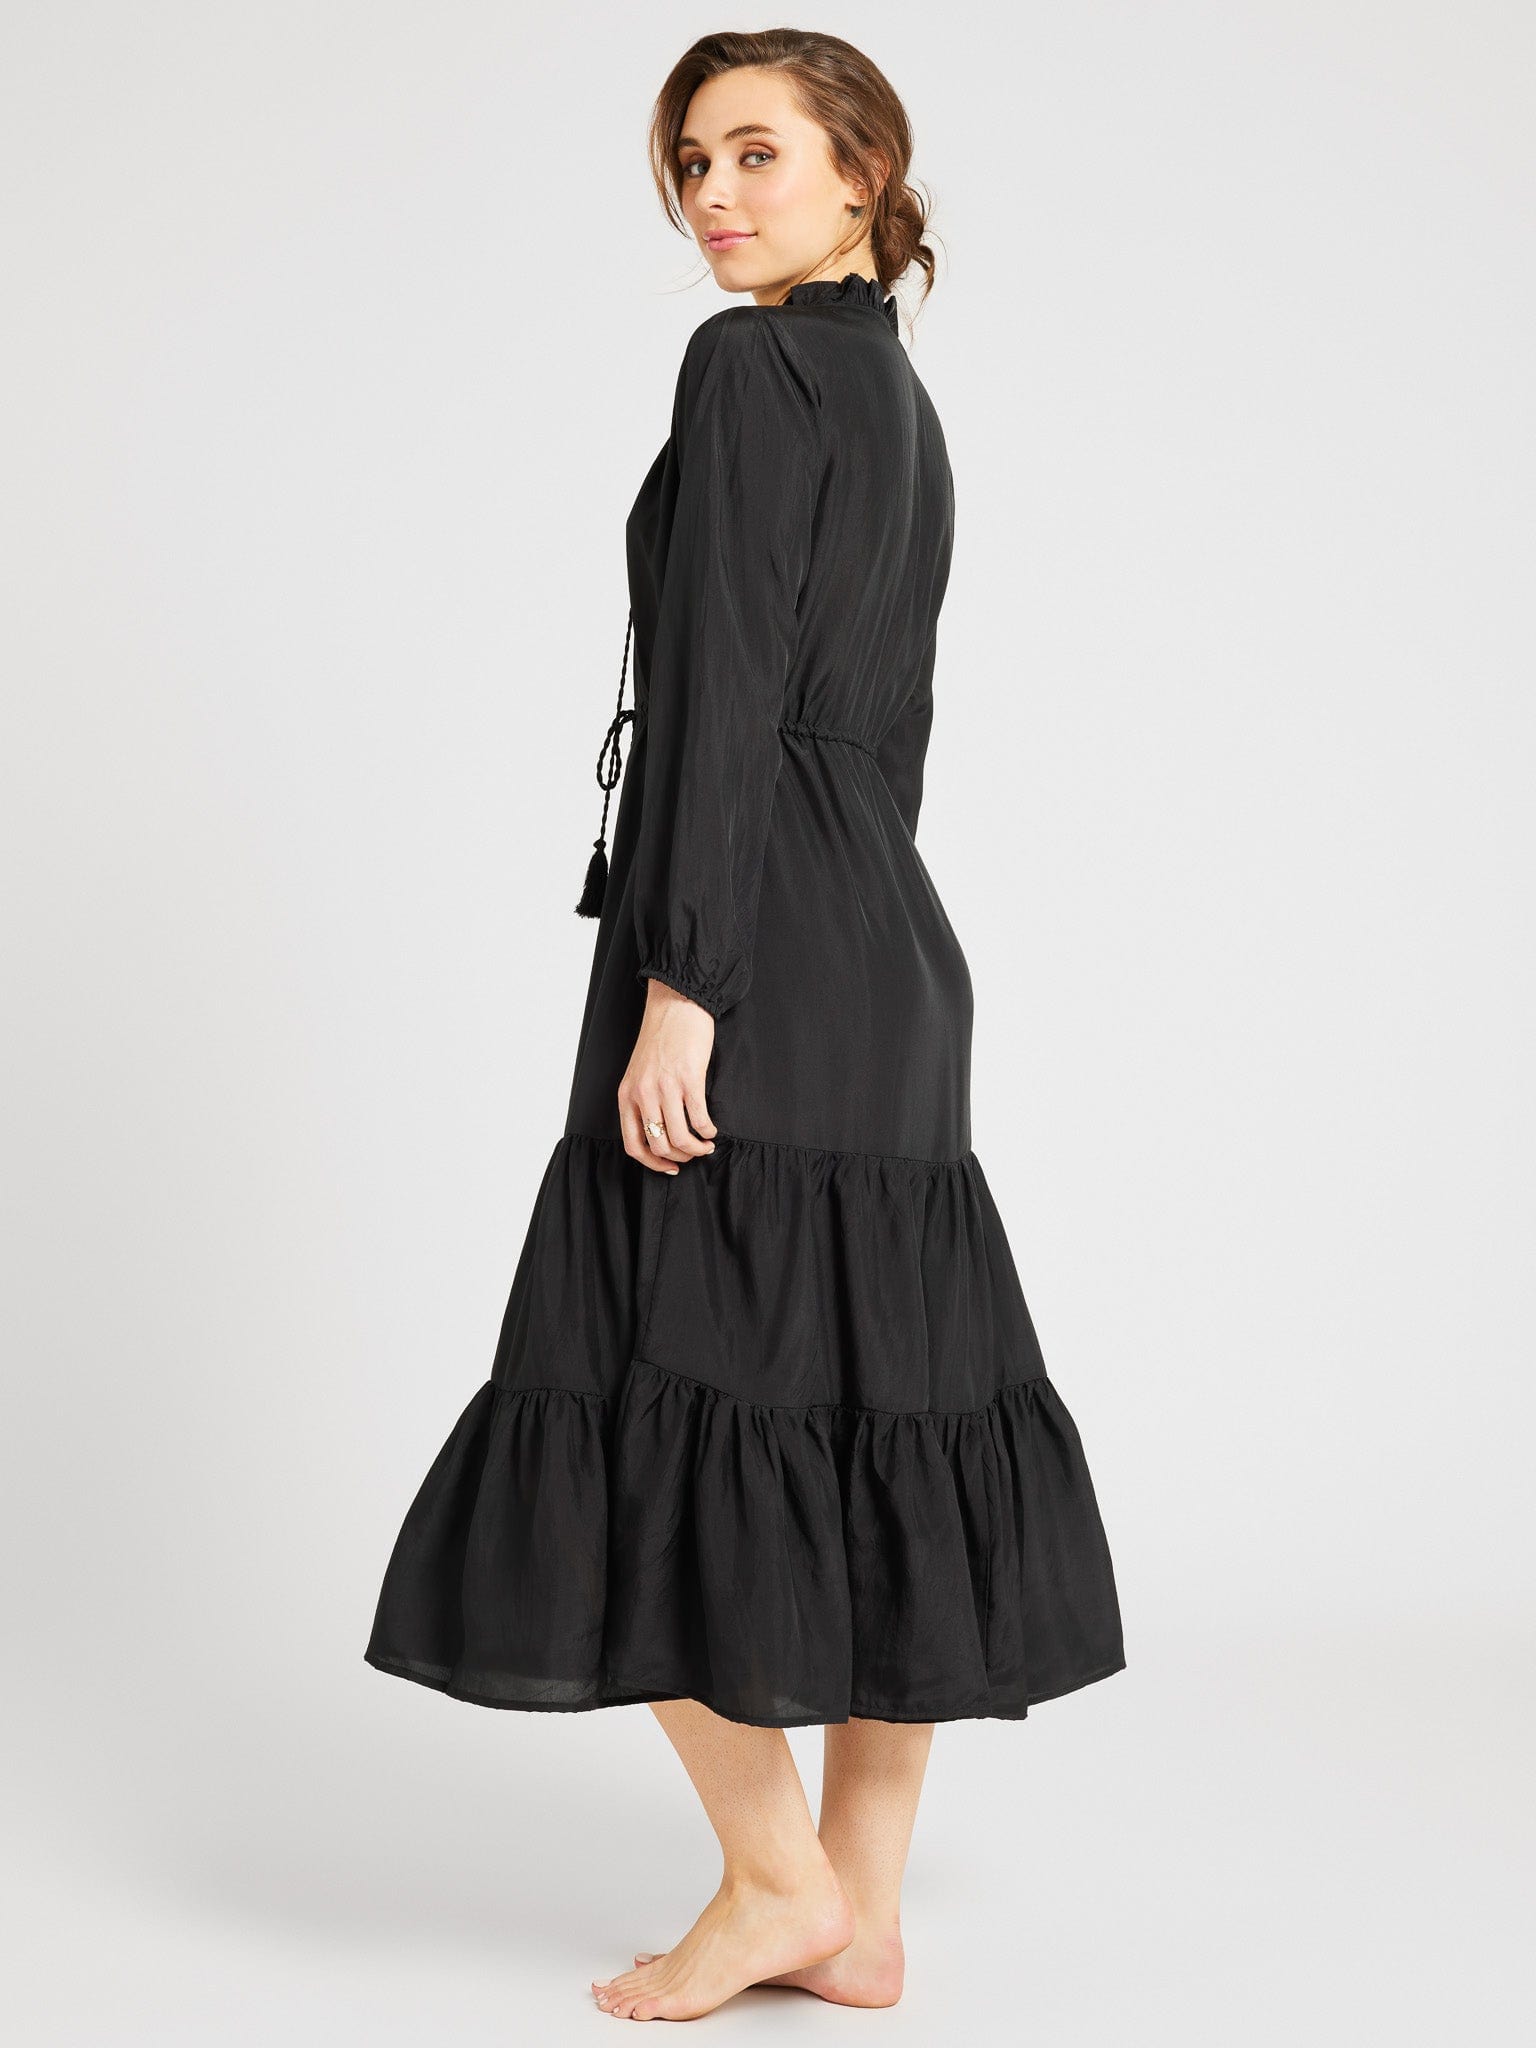 MILLE Clothing Astrid Dress in Black Silk